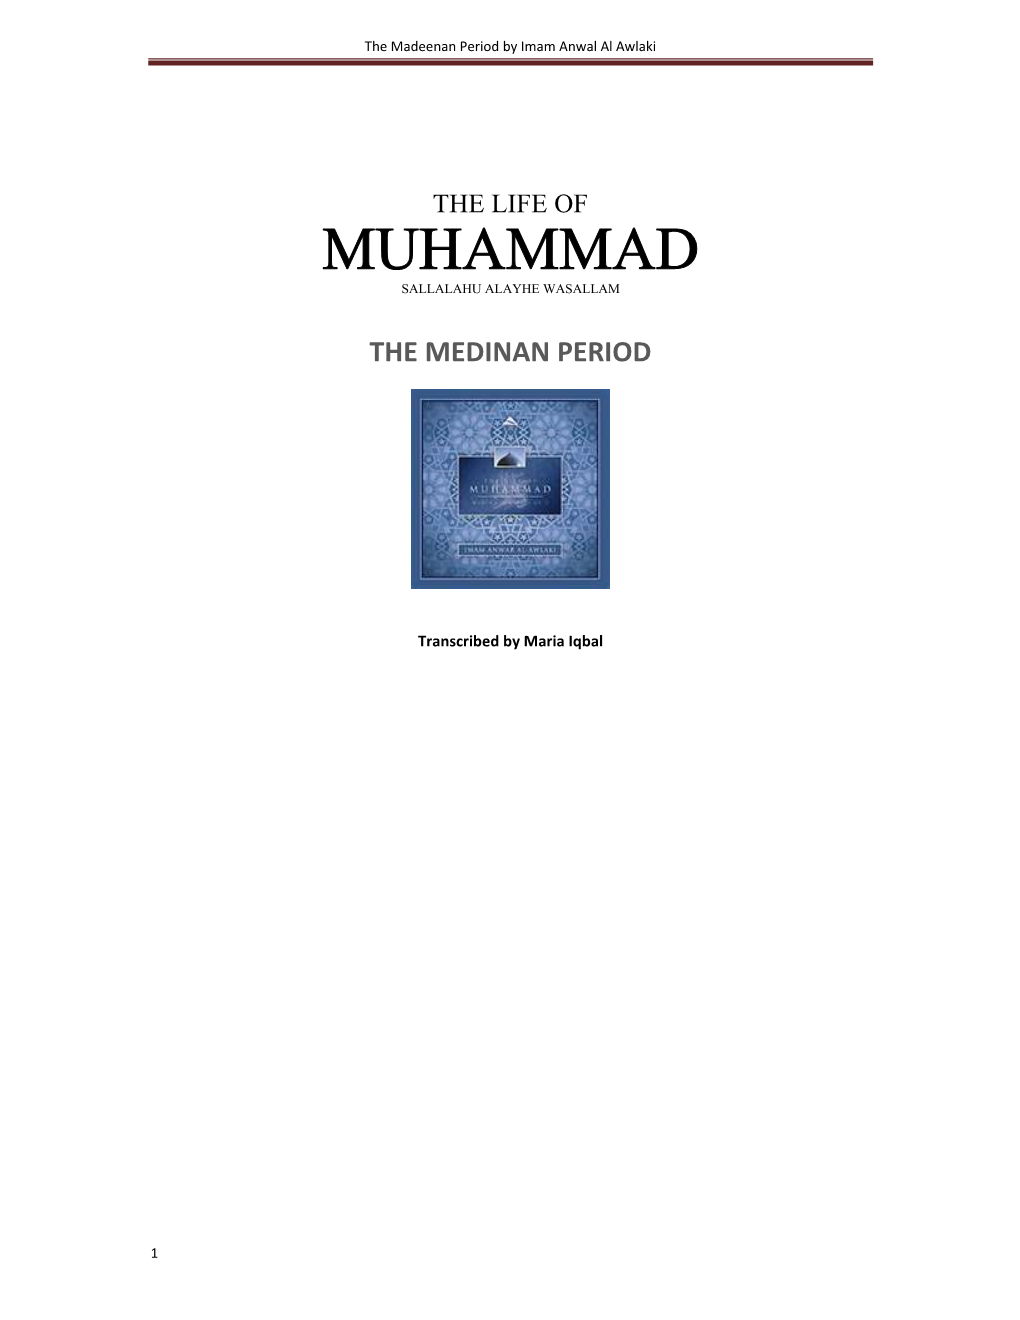 The Life of Prophet Muhammad (Pbuh) in Mecca